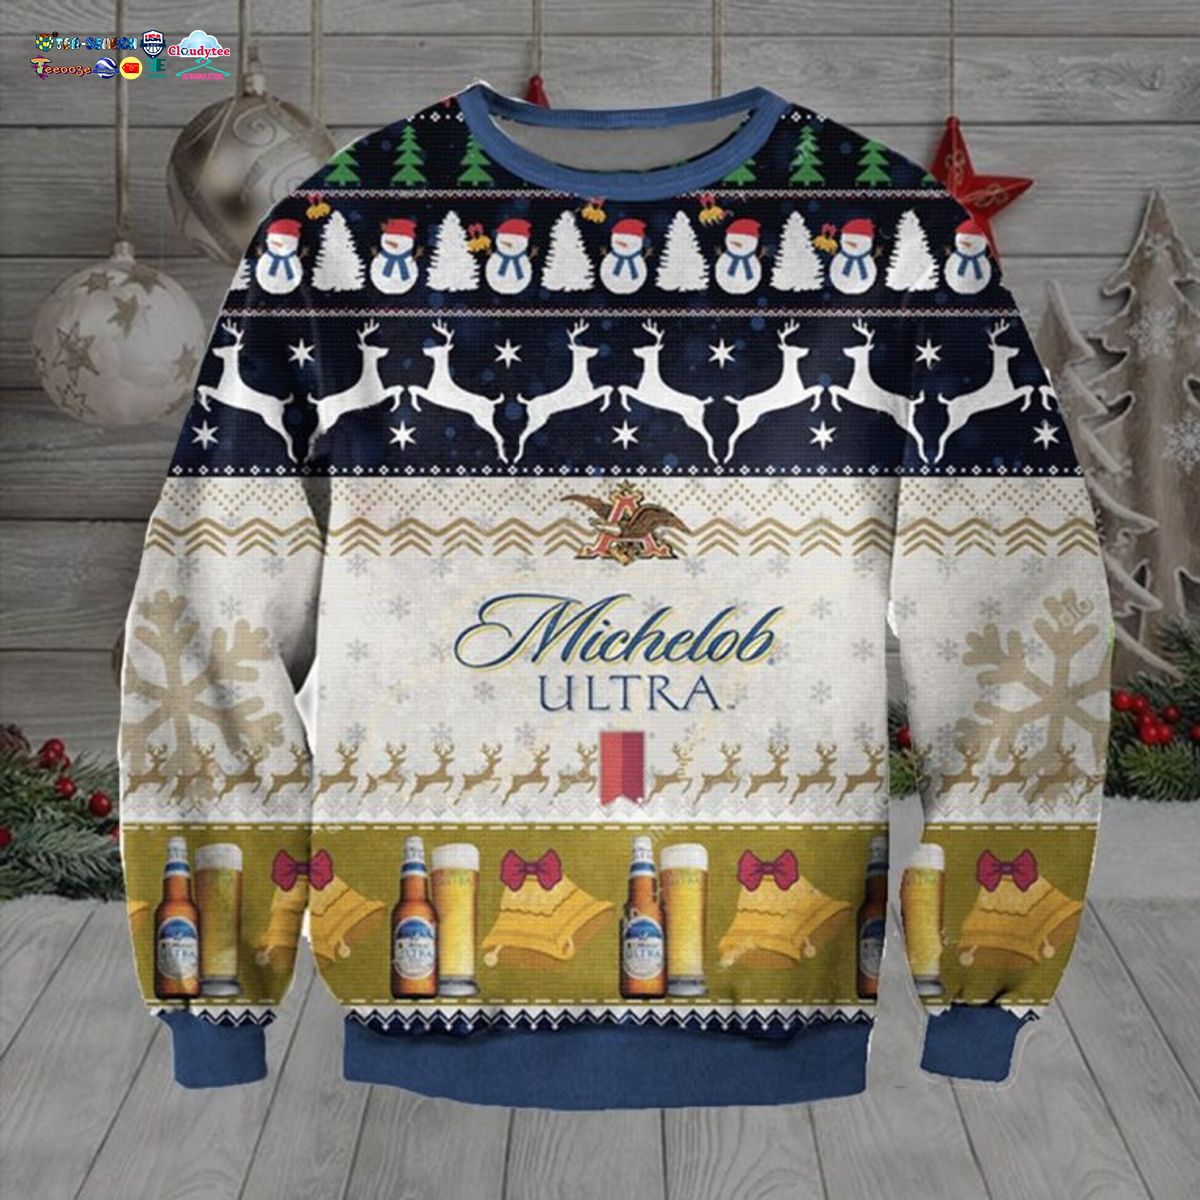 michelob-ultra-ver-1-ugly-christmas-sweater-1-rCWGi.jpg